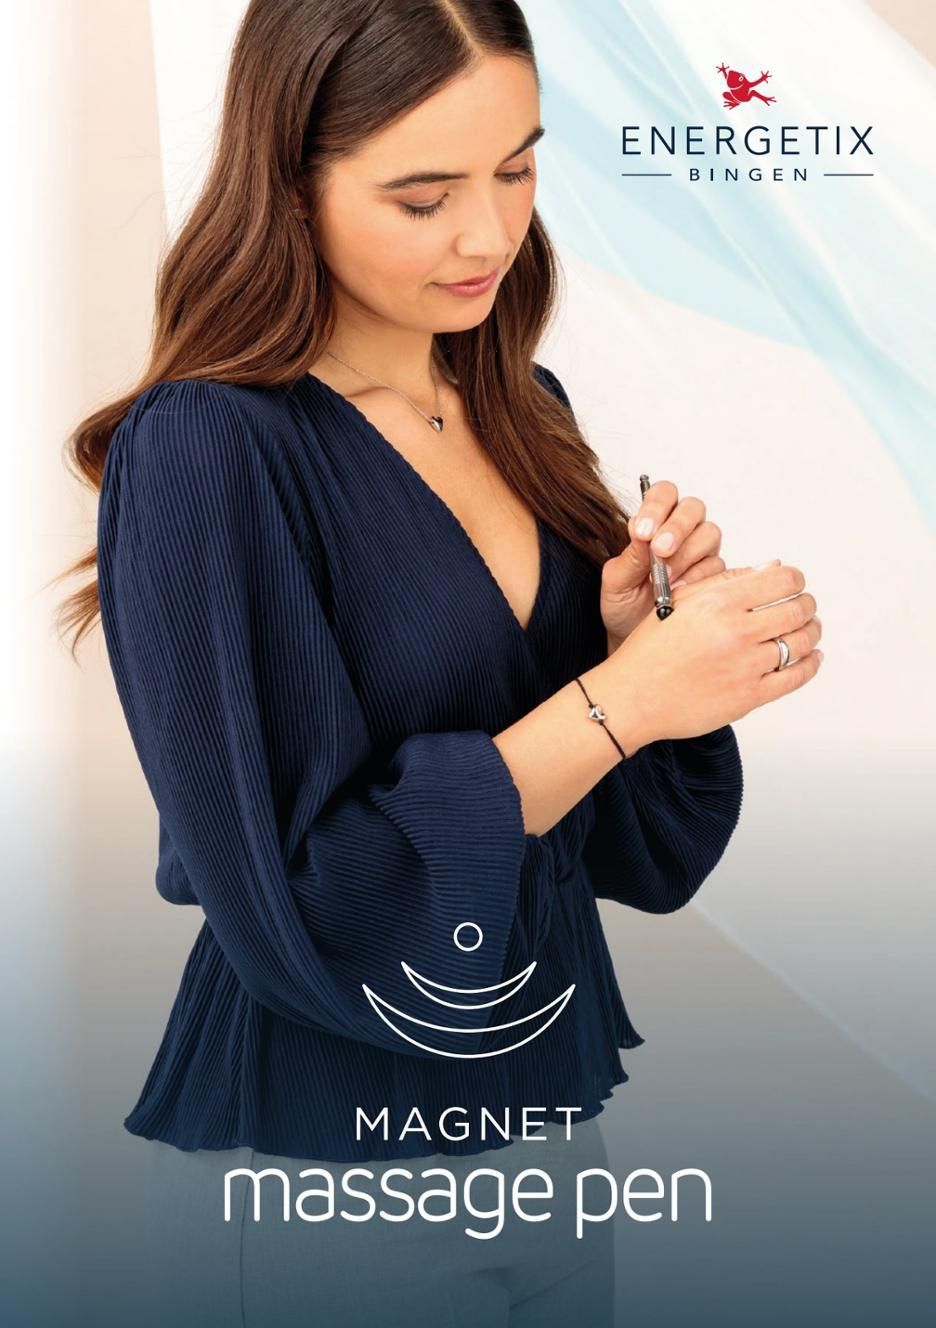 Energetix Magnet massage pen